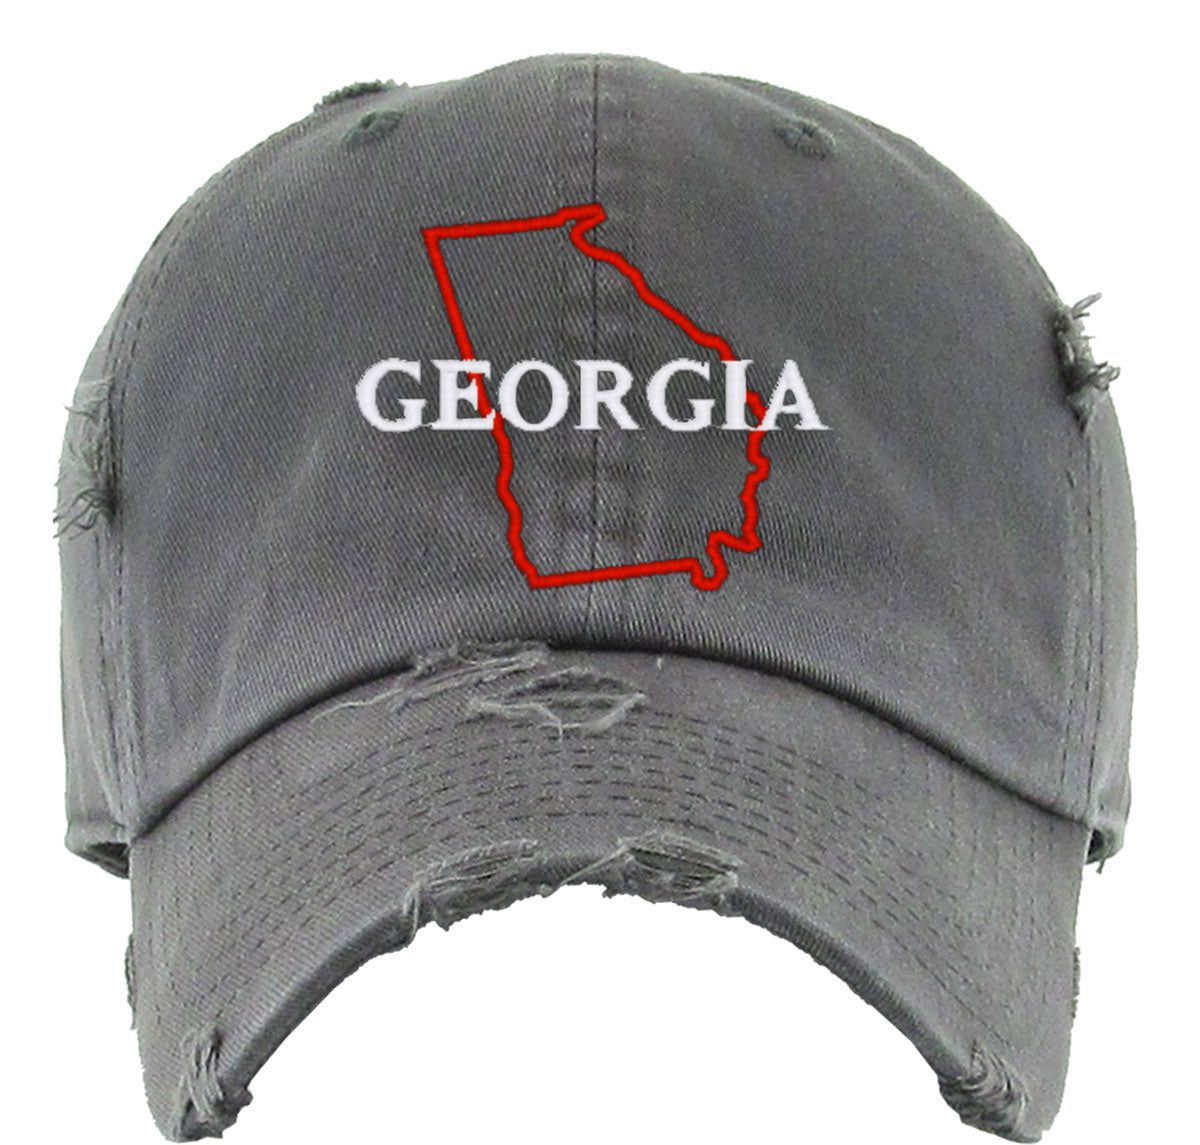 Georgia Vintage Baseball Cap